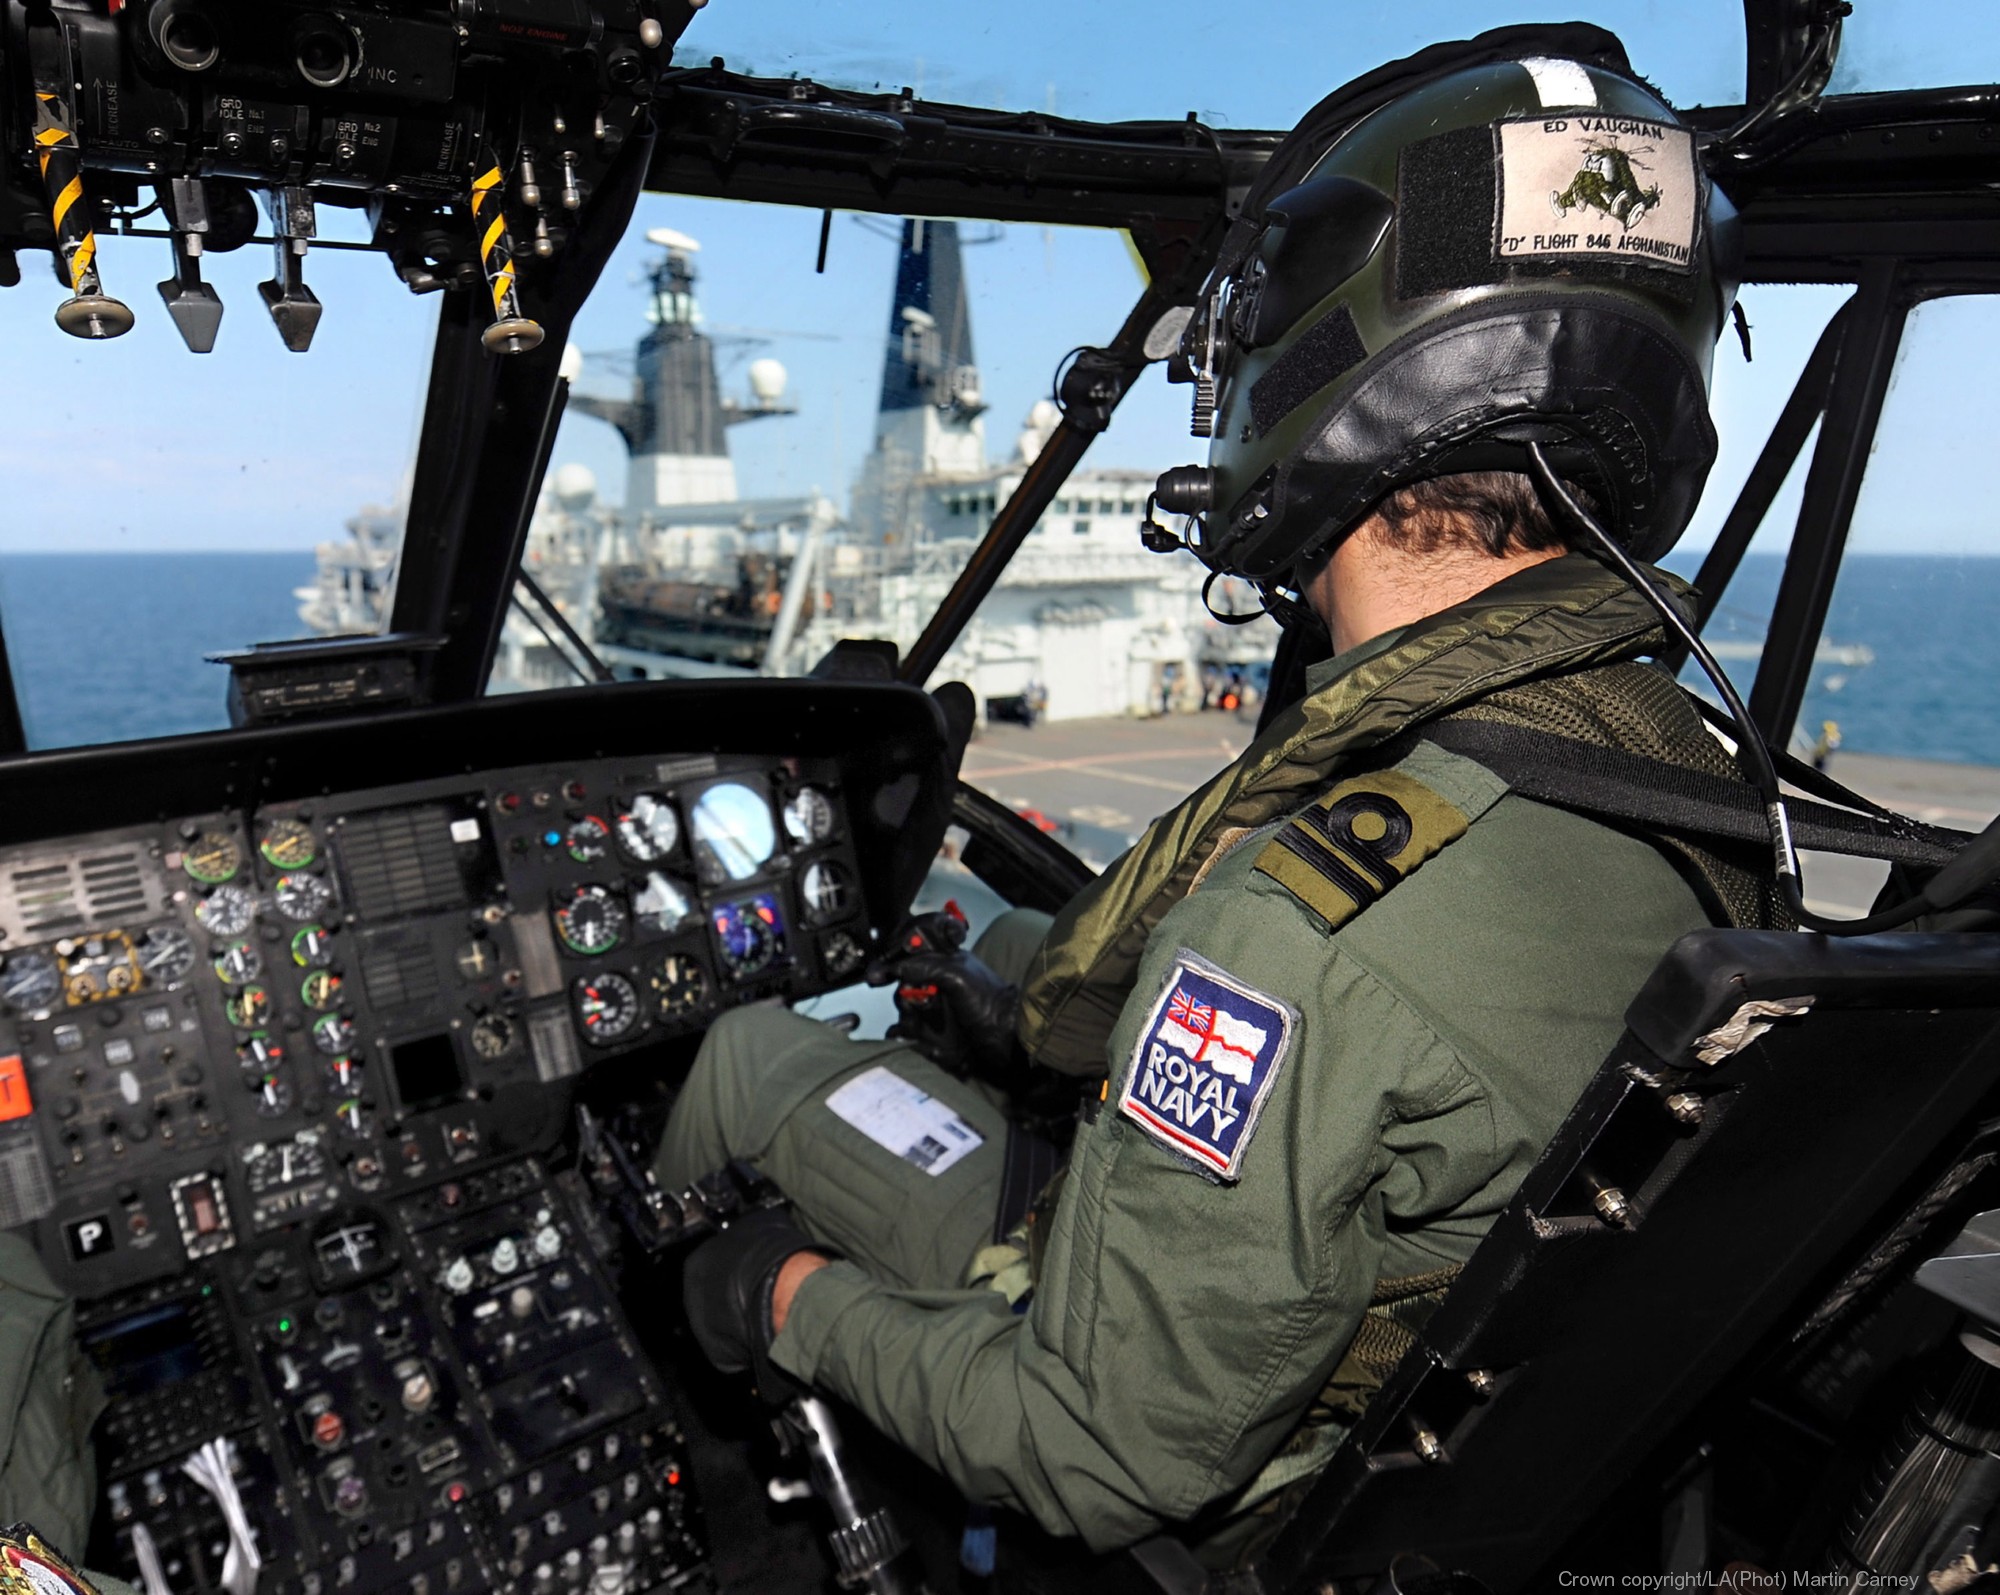 sea king hc.4 helicopter royal navy commando assault marines westland nas squadron rnas 53 hms ocean l-12